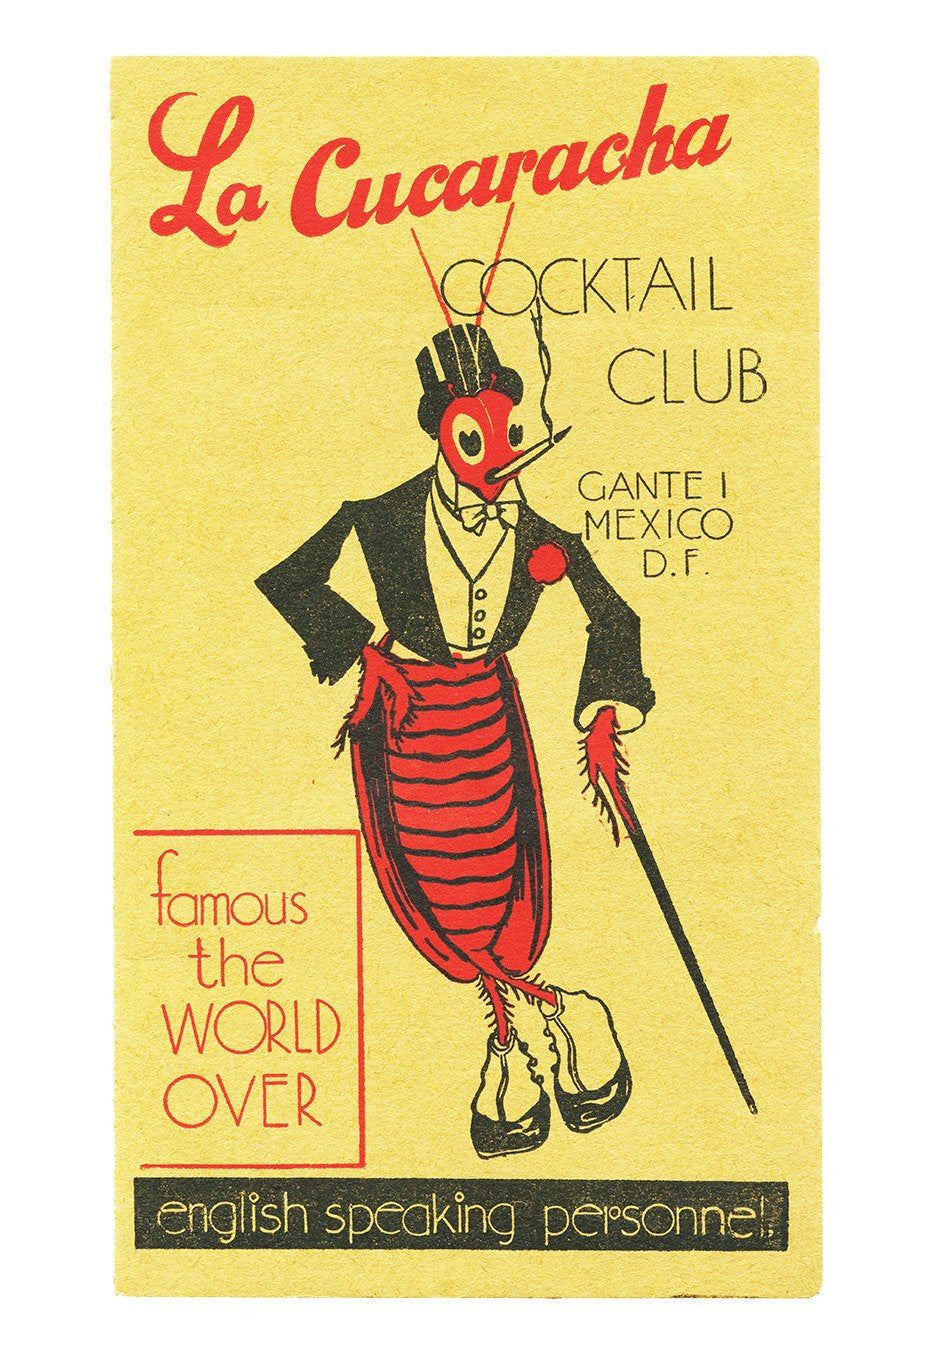 La Cucaracha Cocktail Club, Mexico City, 1930s Menu Art – Vintage Menu Art